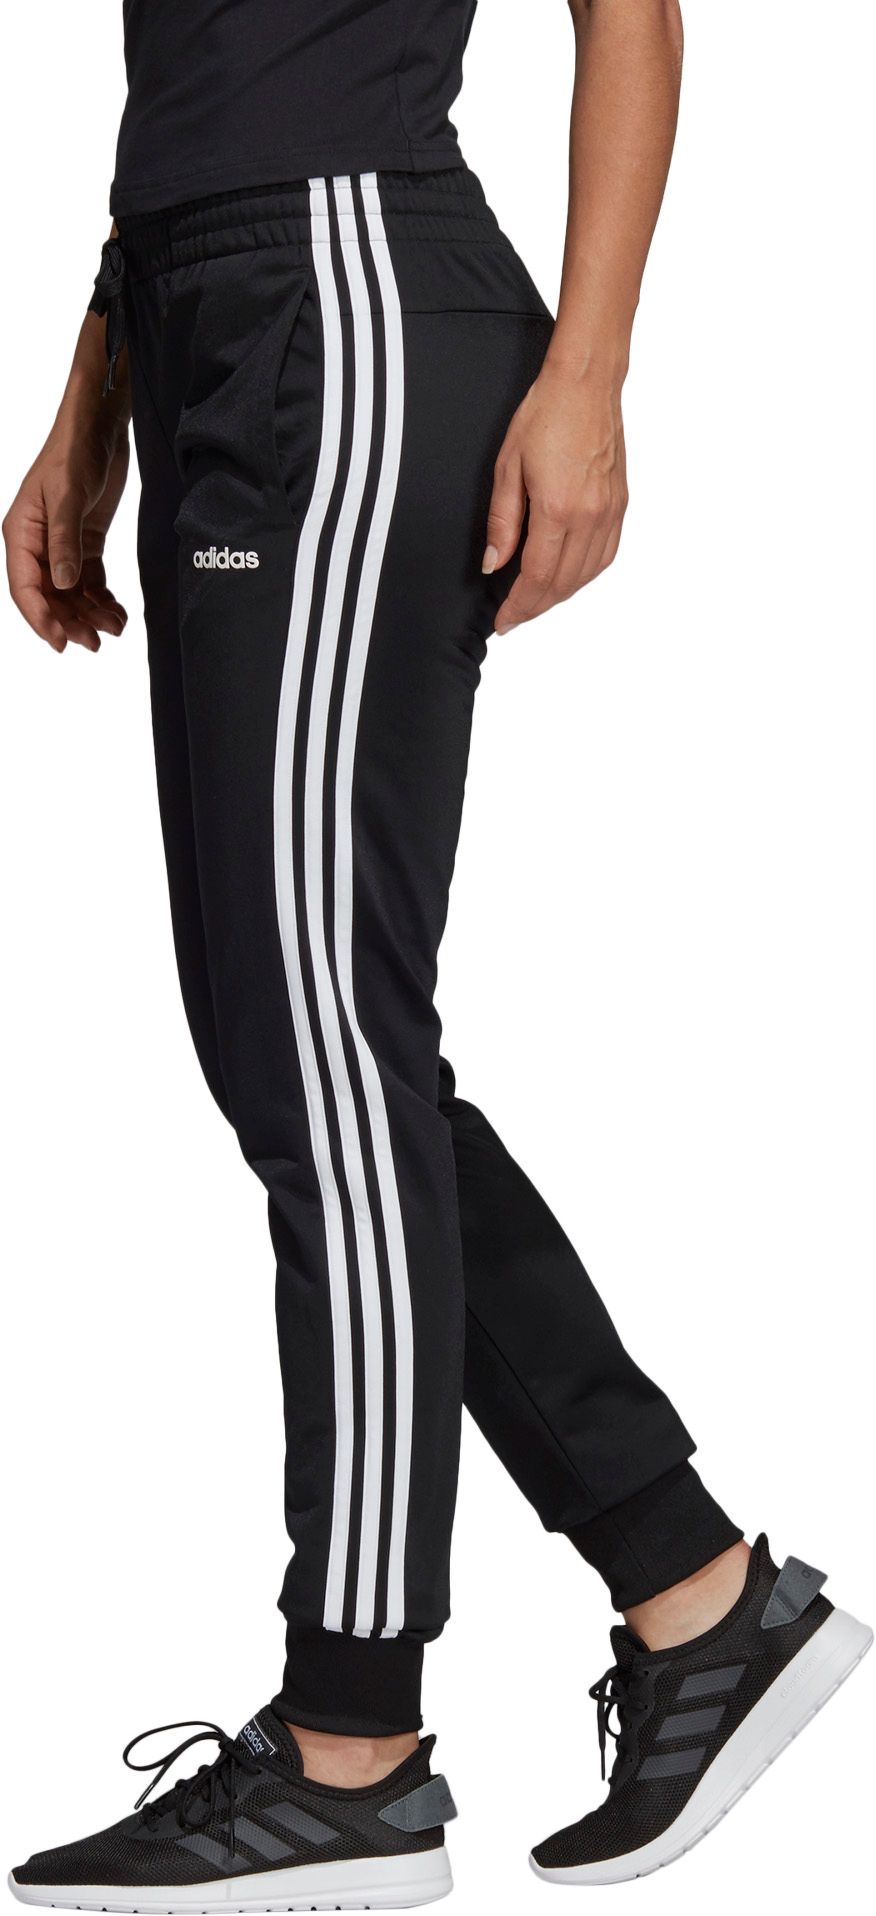 adidas women's 3 stripes tricot pants